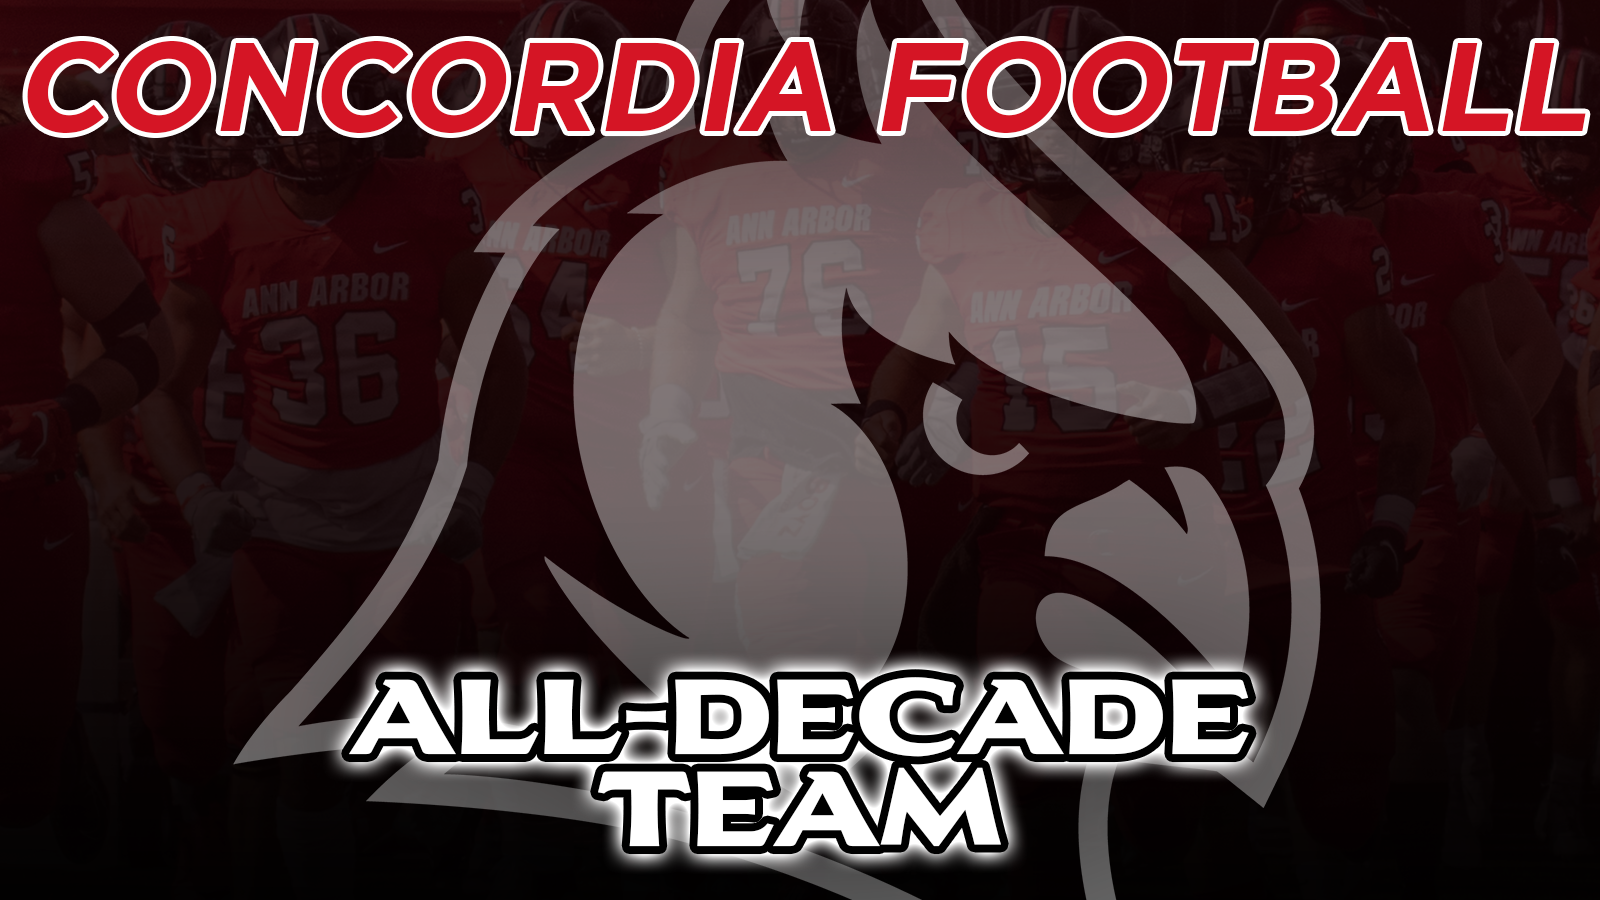 Concordia Football announces All-Decade Team